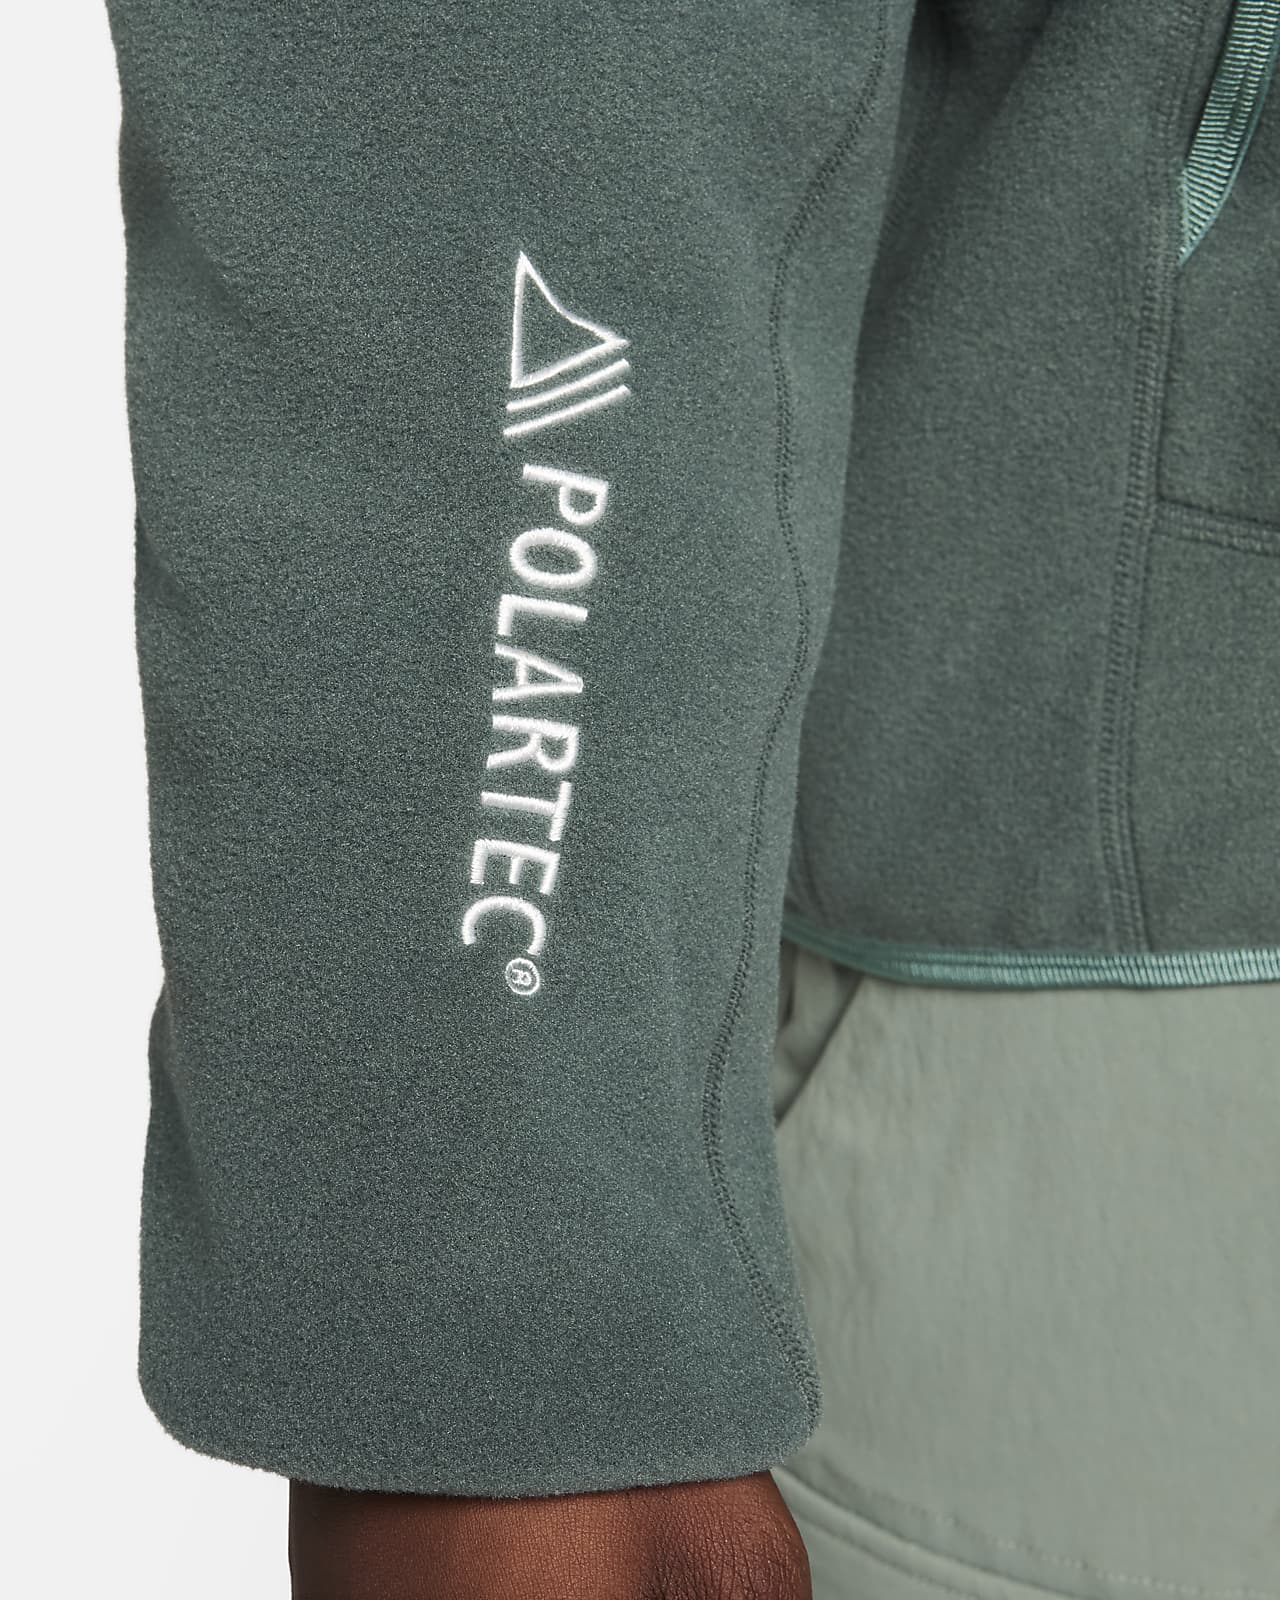 Nike ACG 'Wolf Tree' Polartec® Men's Full-Zip Top